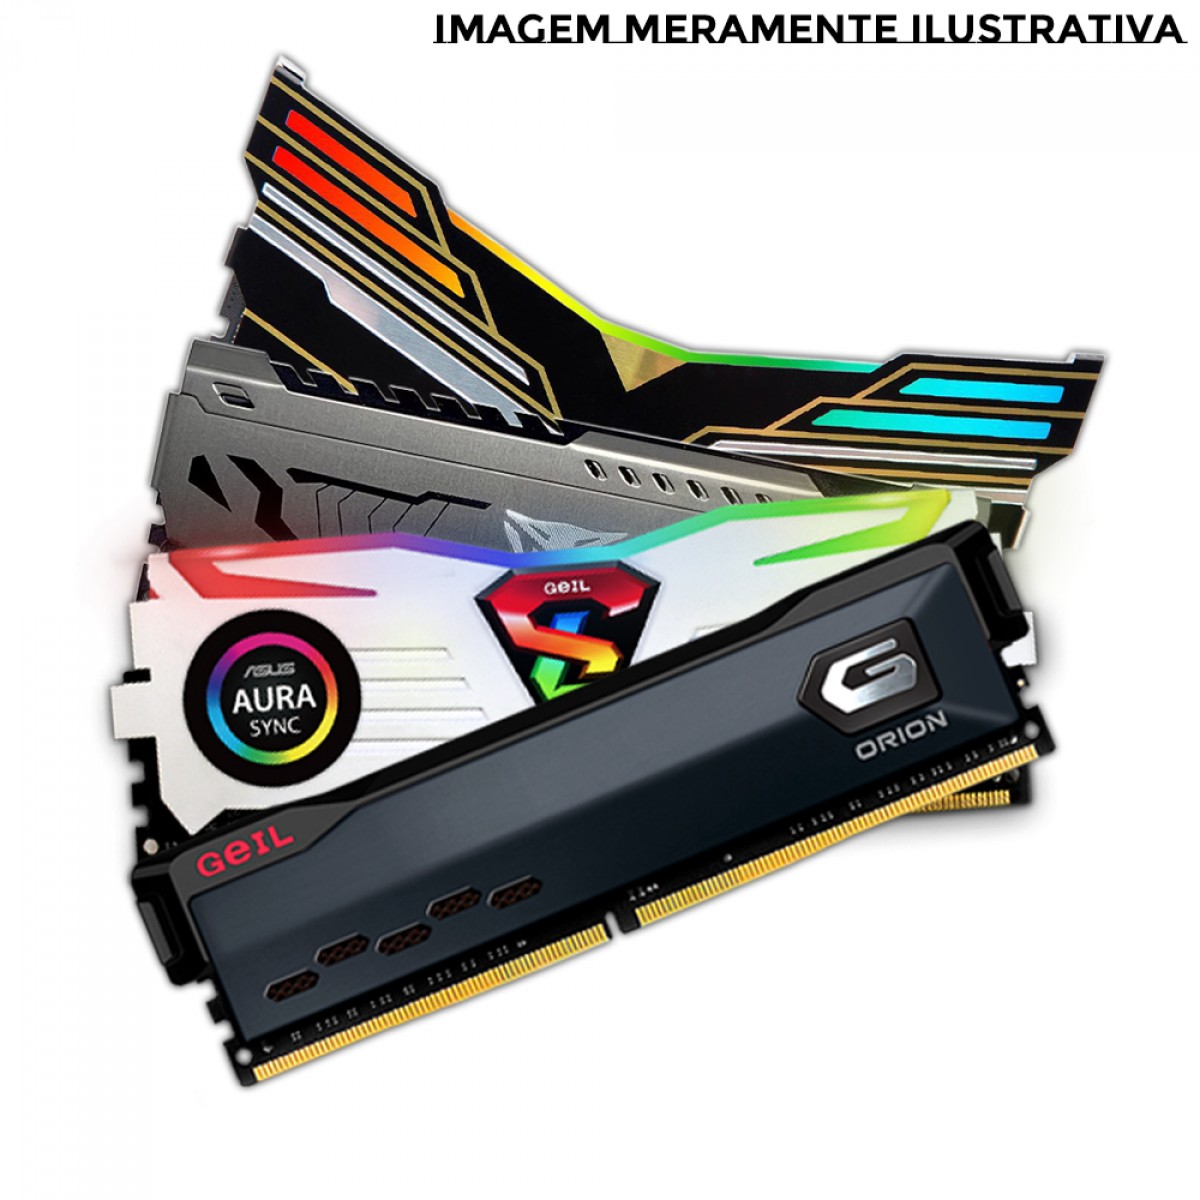 Kit Upgrade, AMD Ryzen 5 3400G, Gigabyte B450 AORUS M, Memória DDR4 8GB 3000MHz